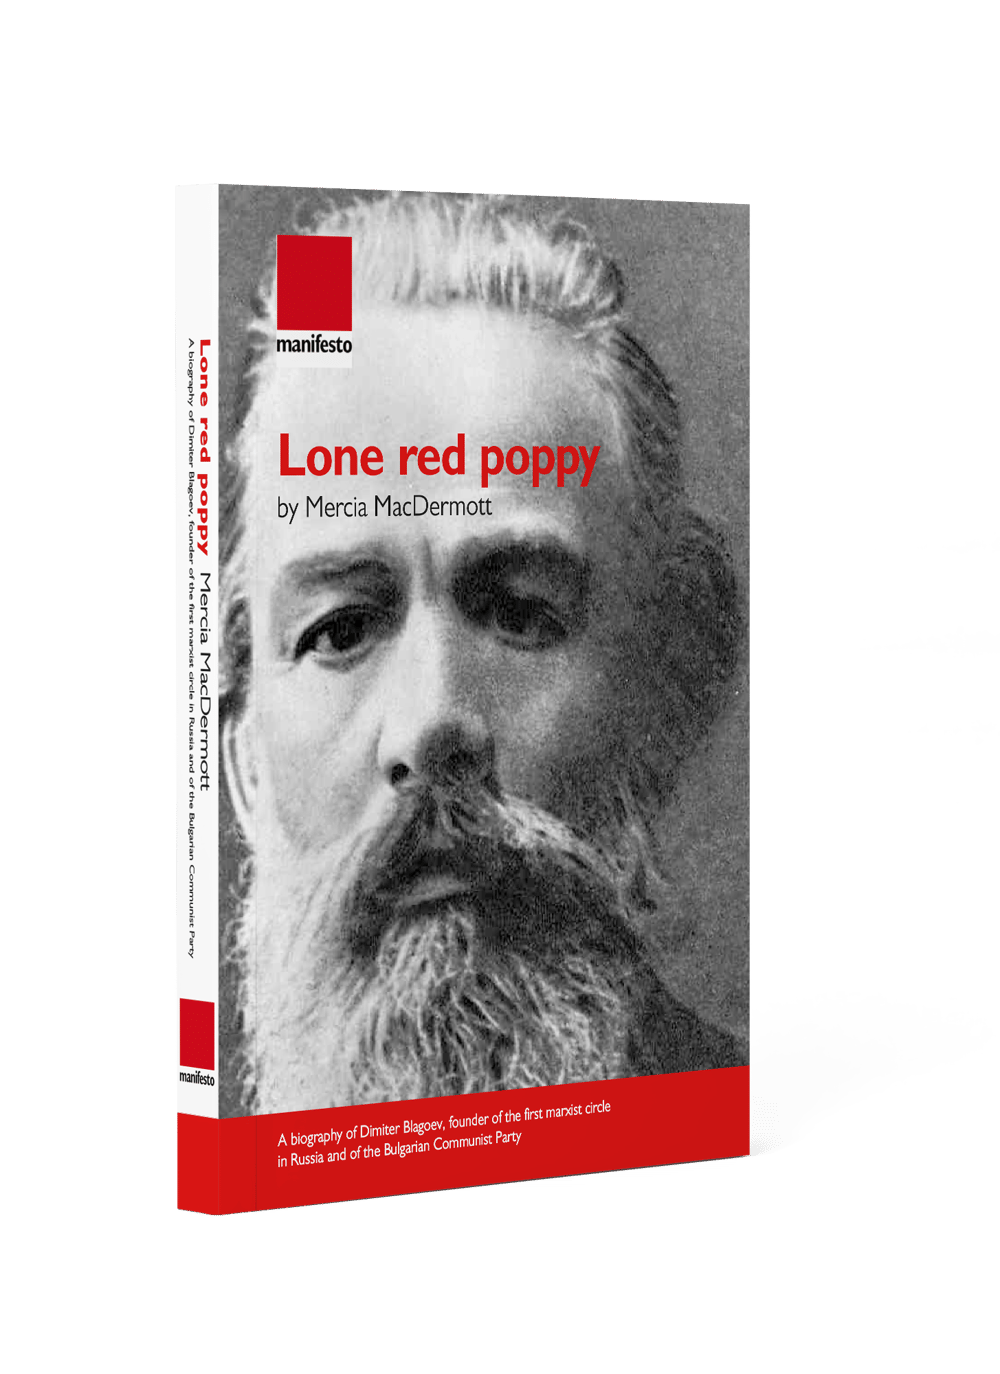 Lone red poppy  A biography of Dimiter Blagoev